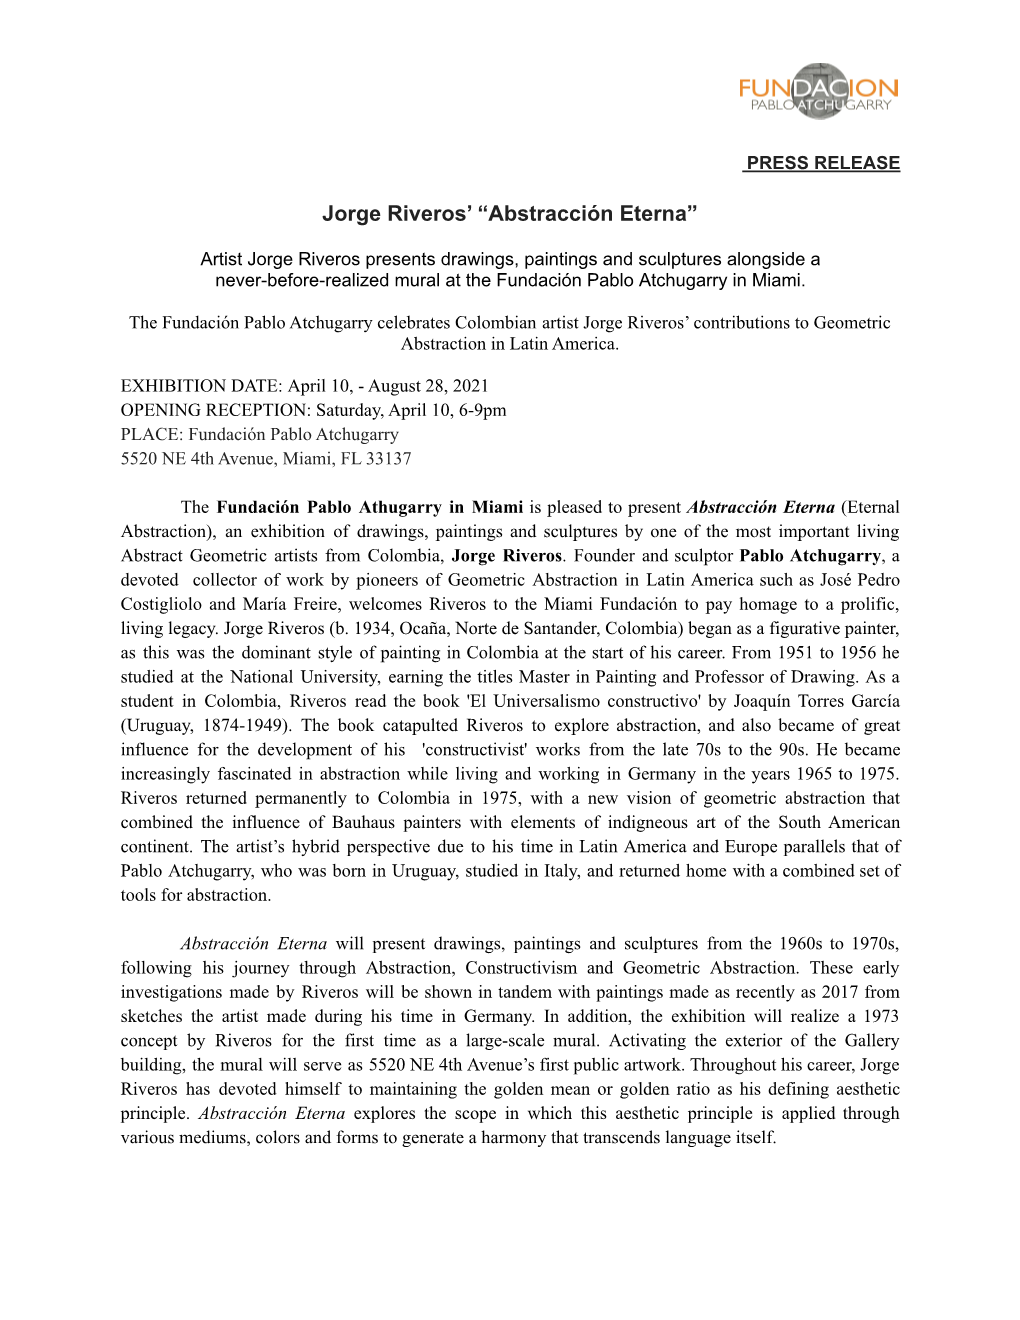 Jorge Riveros Press Release